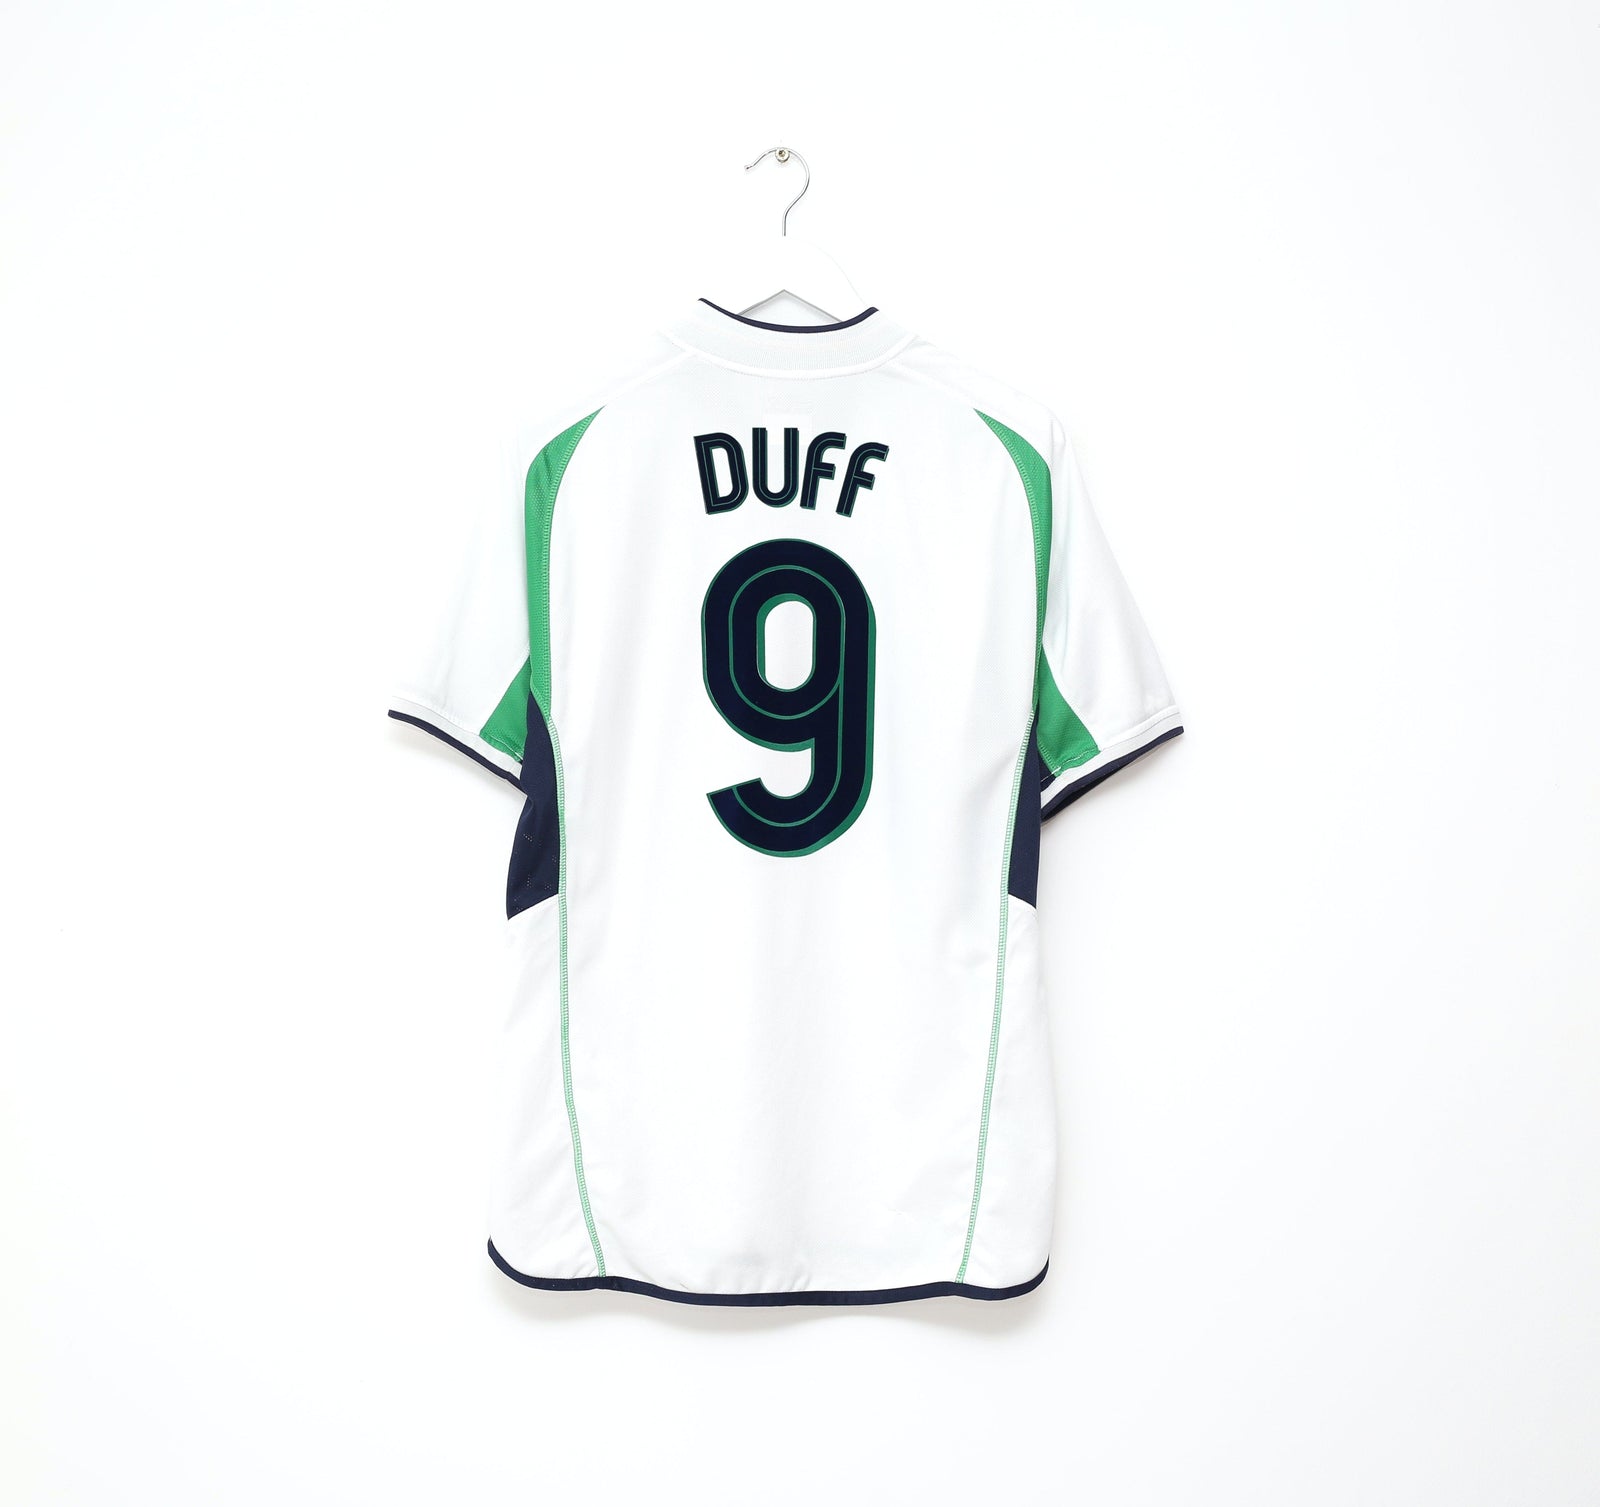 2002/03 DUFF #9 Ireland Vintage Umbro Away Football Shirt (L) World Cup 2002